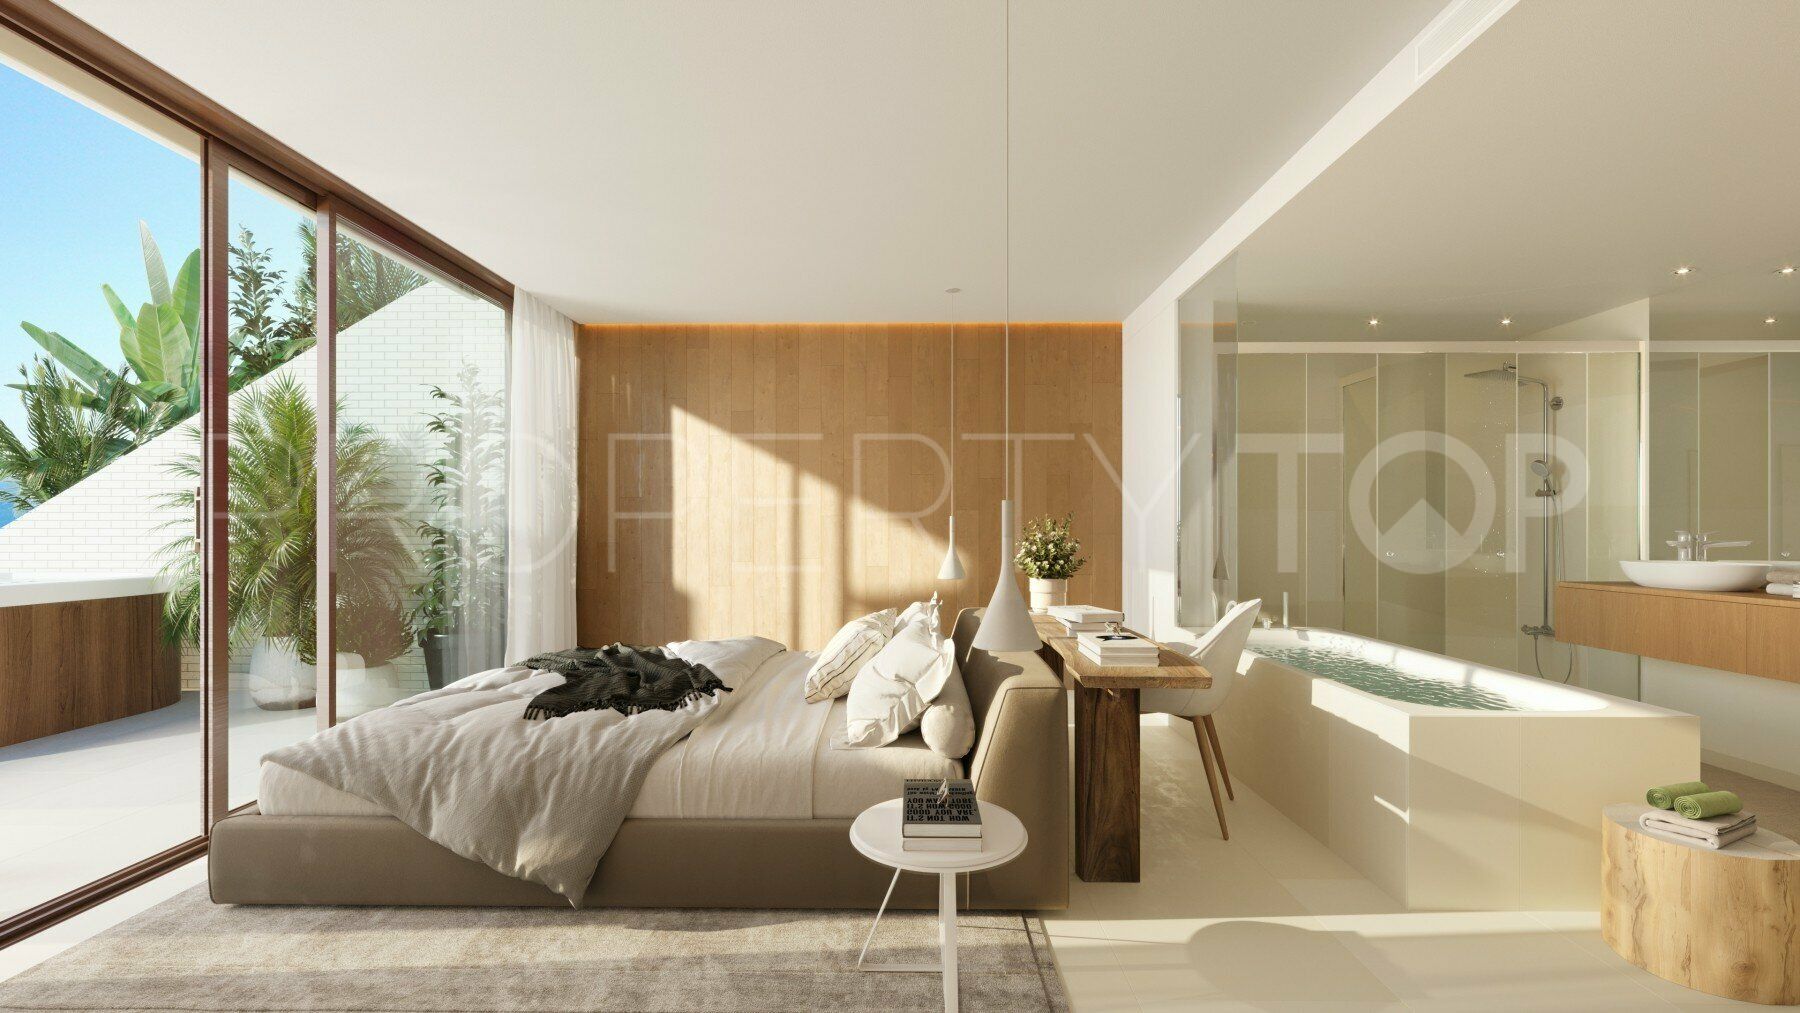 Buy El Higueron penthouse with 3 bedrooms